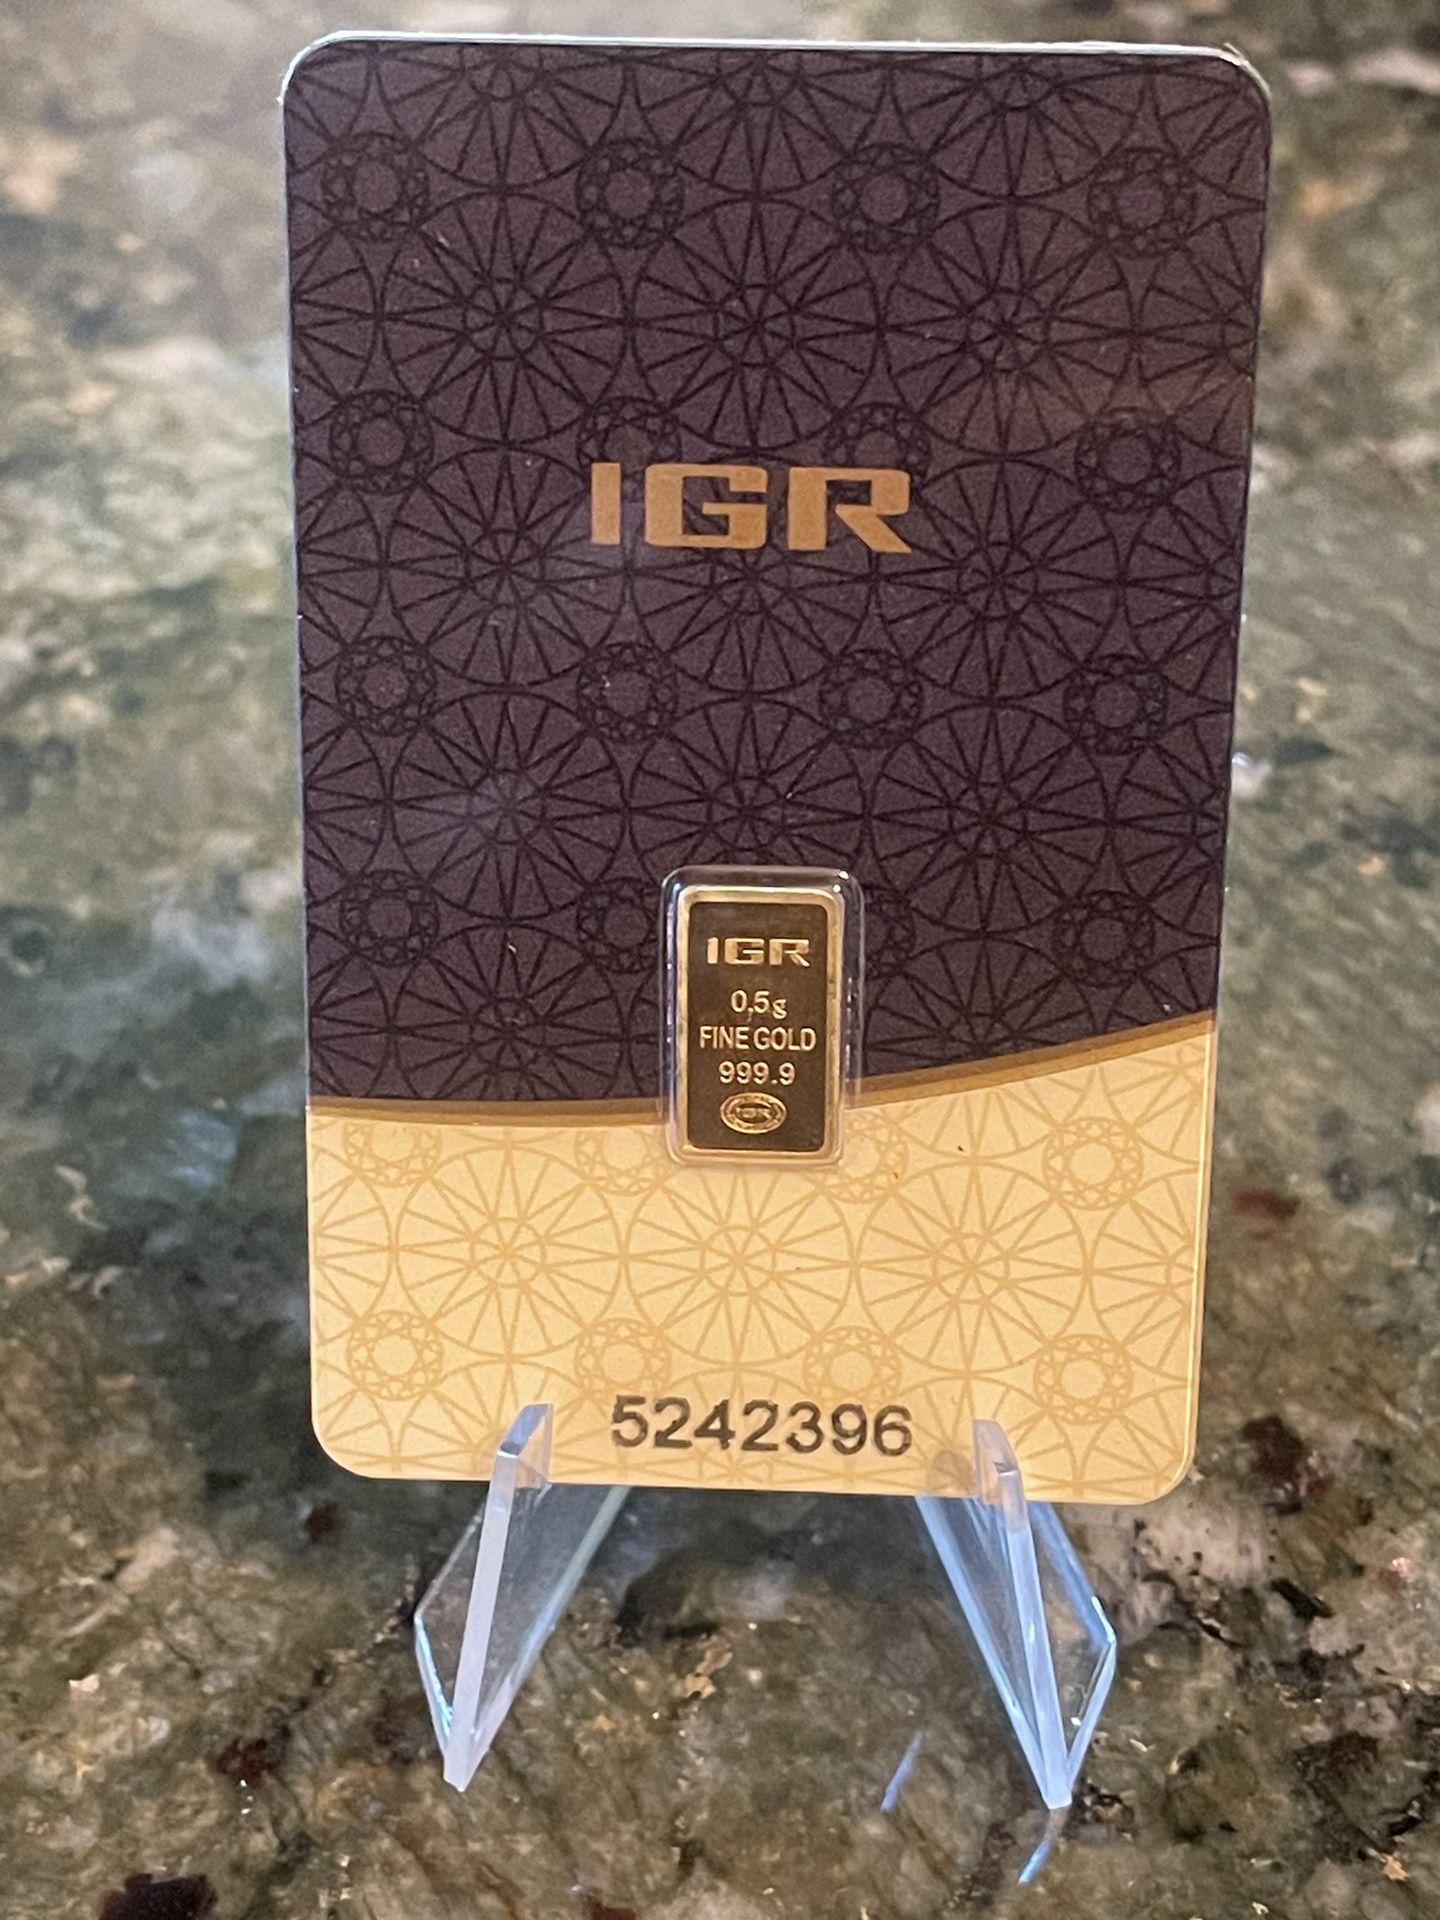 IGR .5 Gram Gold Bar Istanbul Gold Refinery 999.9 in Assay